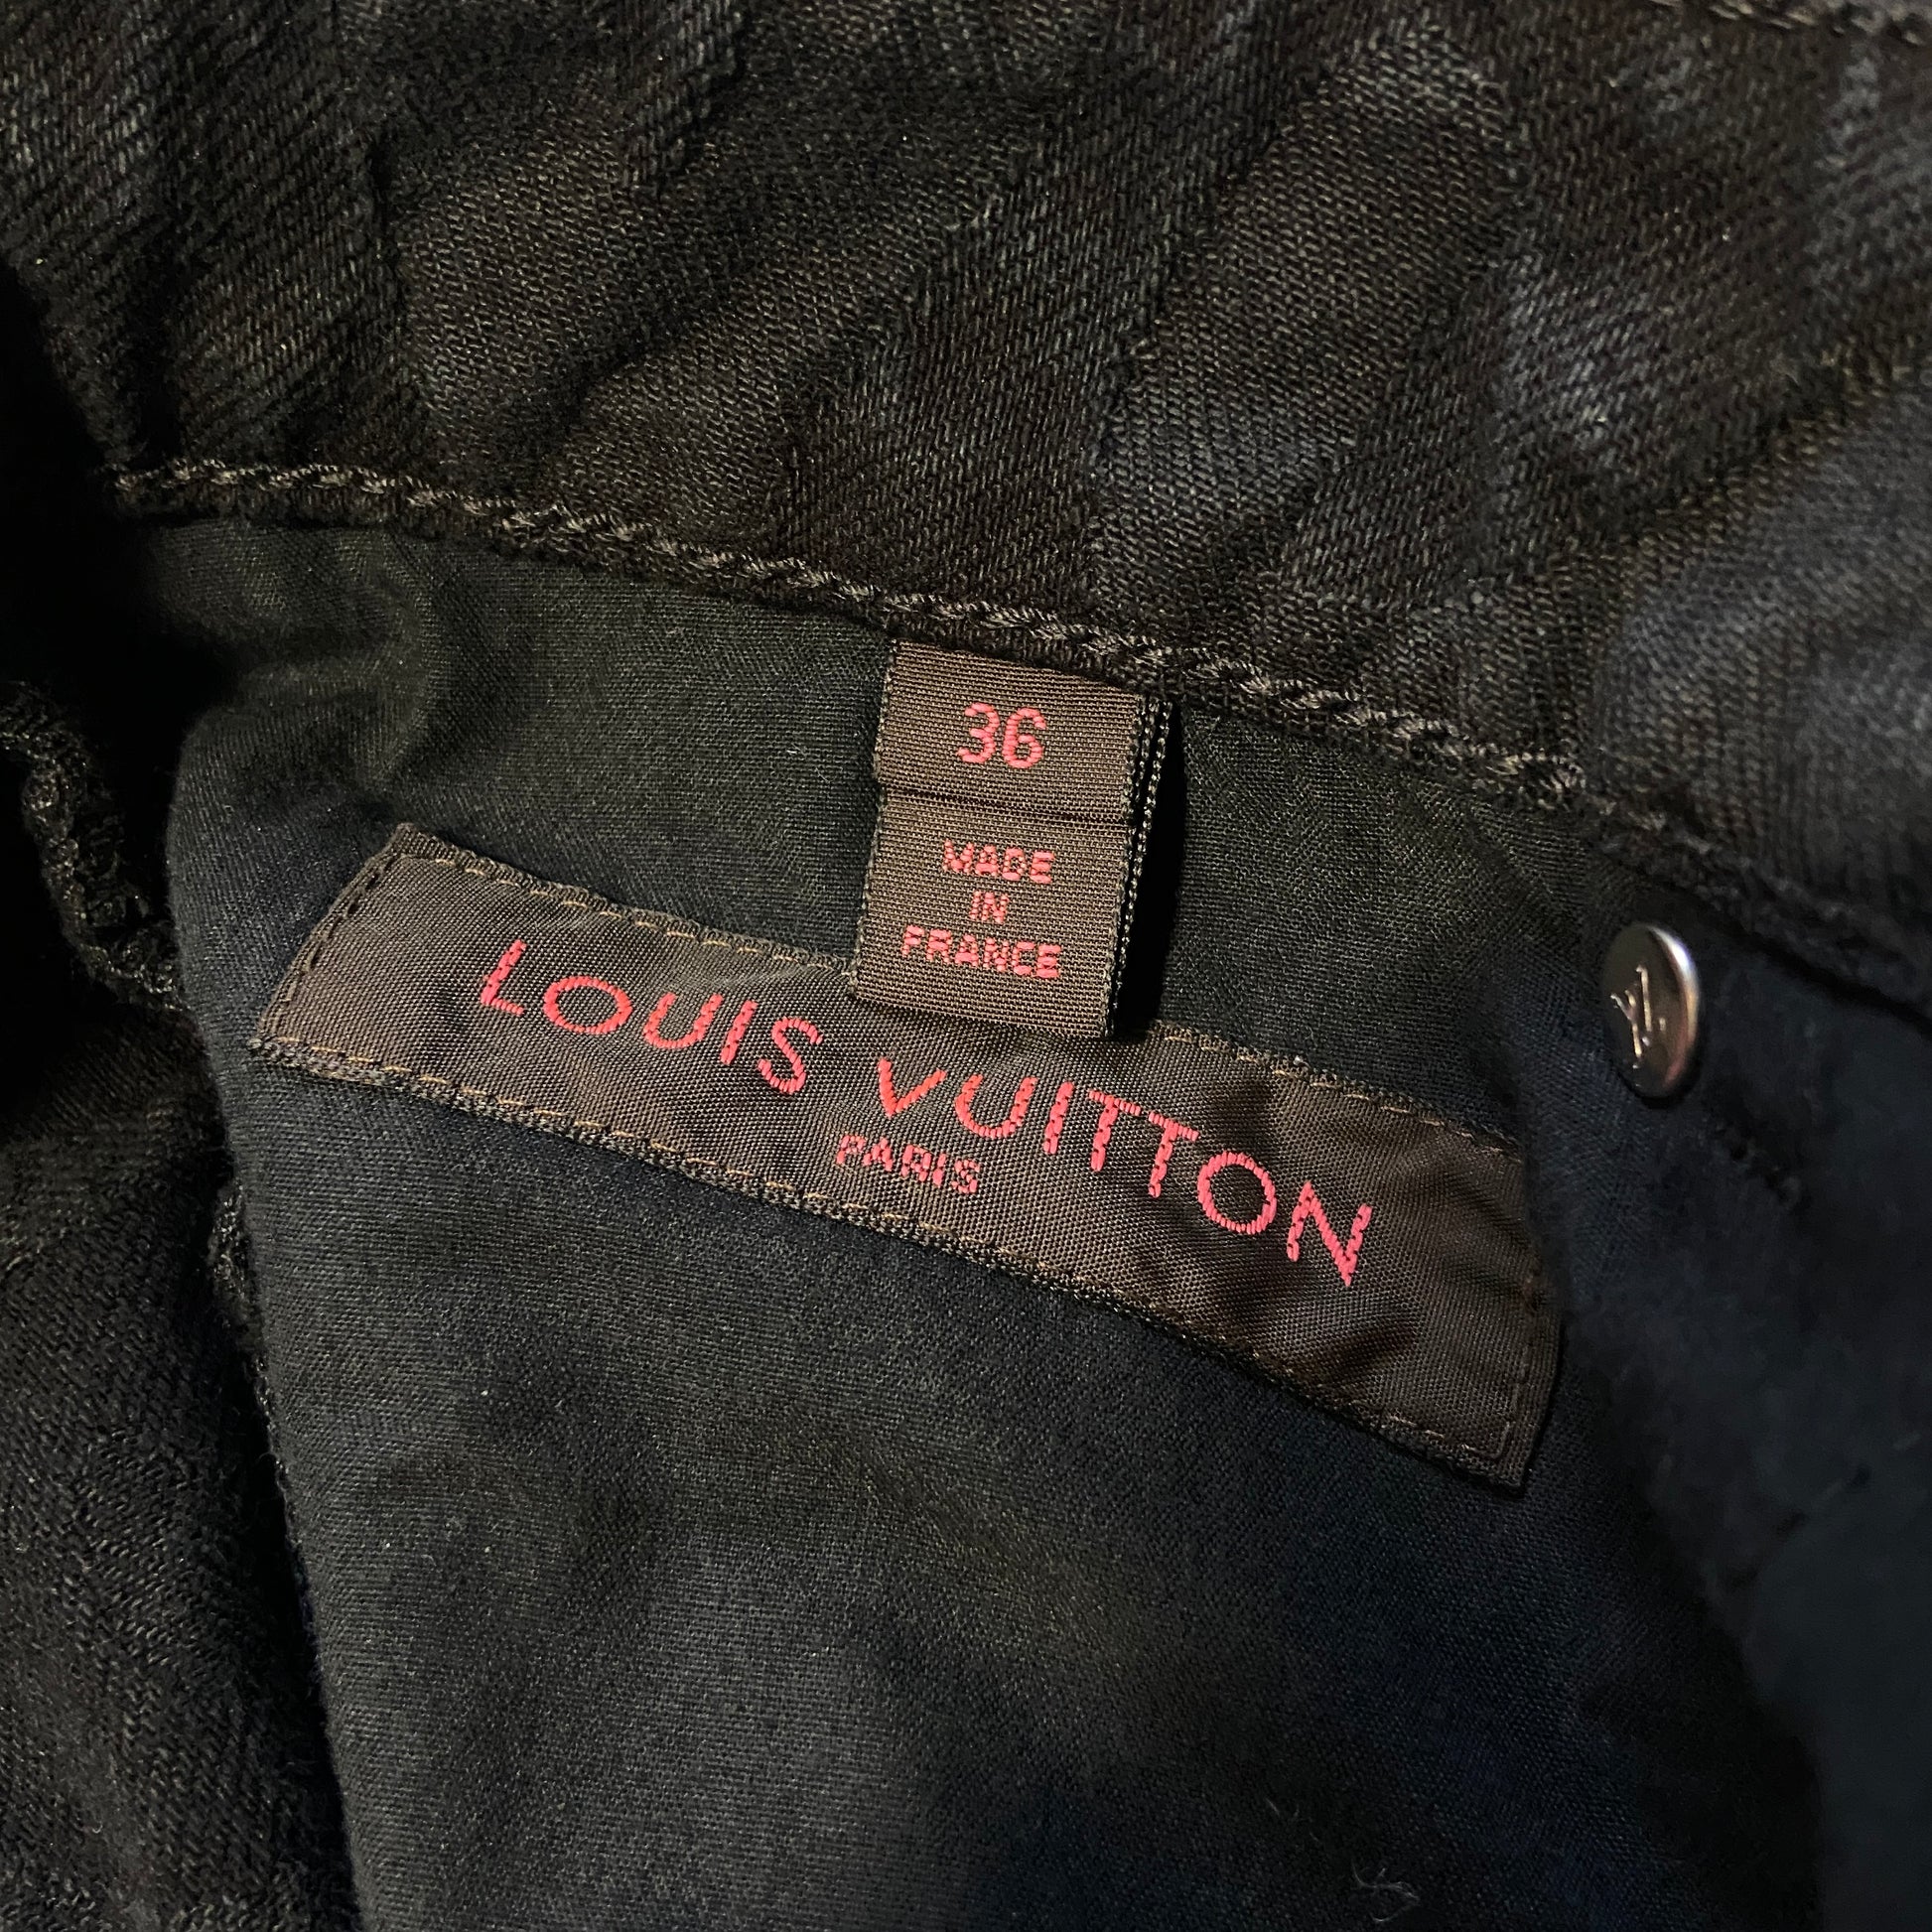 Louis Vuitton x Stephen Sprouse SS2009 Graffiti Monogram Jeans